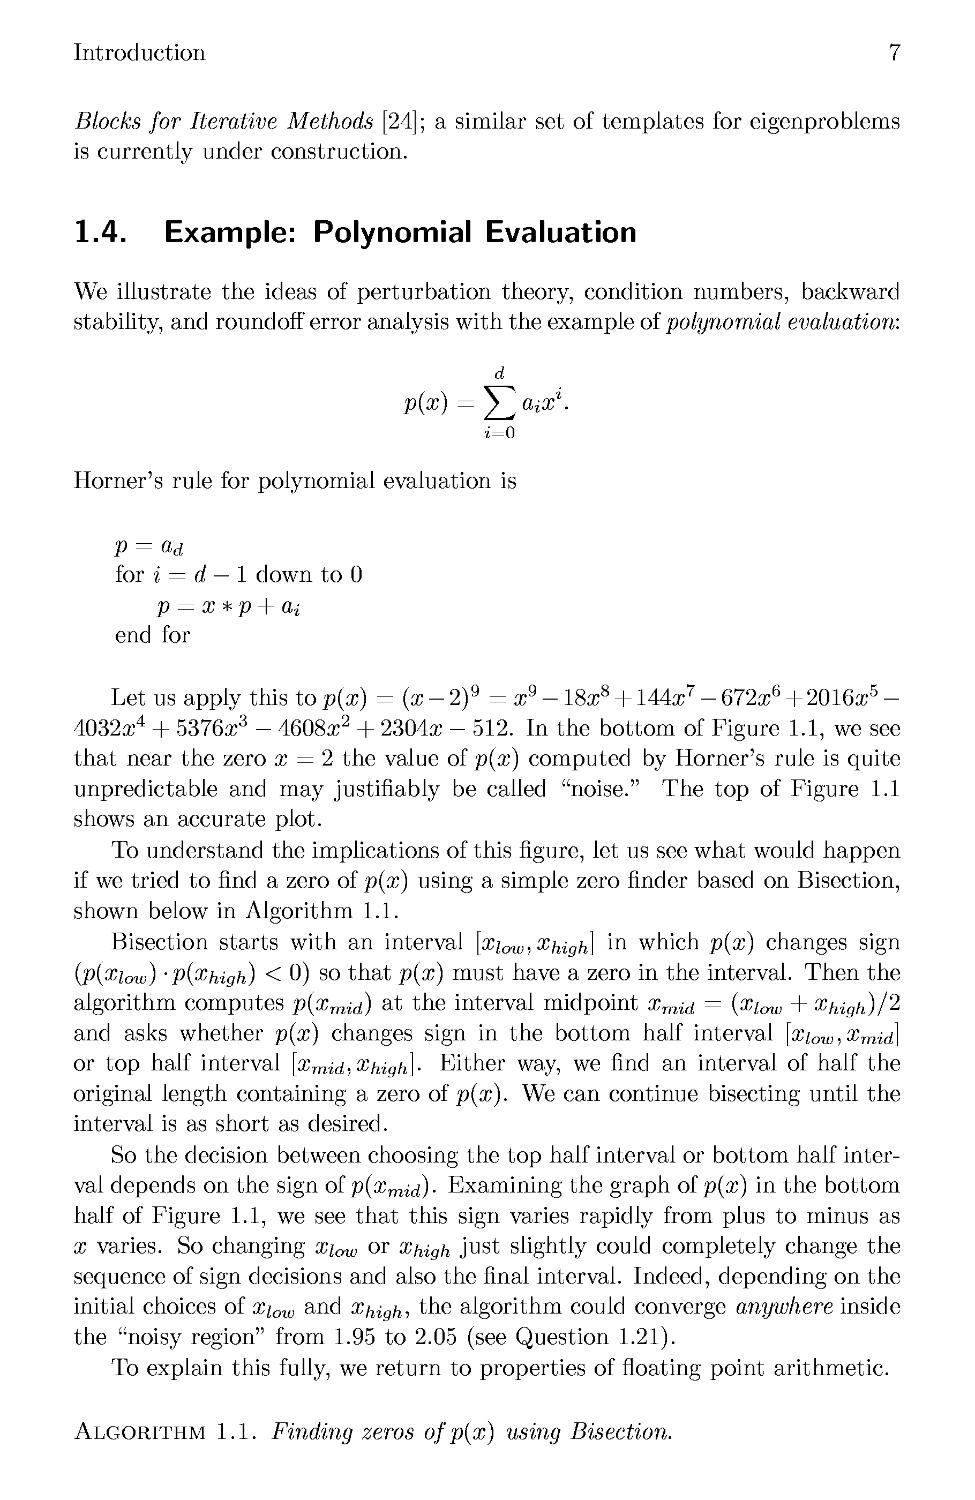 1.4 Example: Polynomial Evaluation